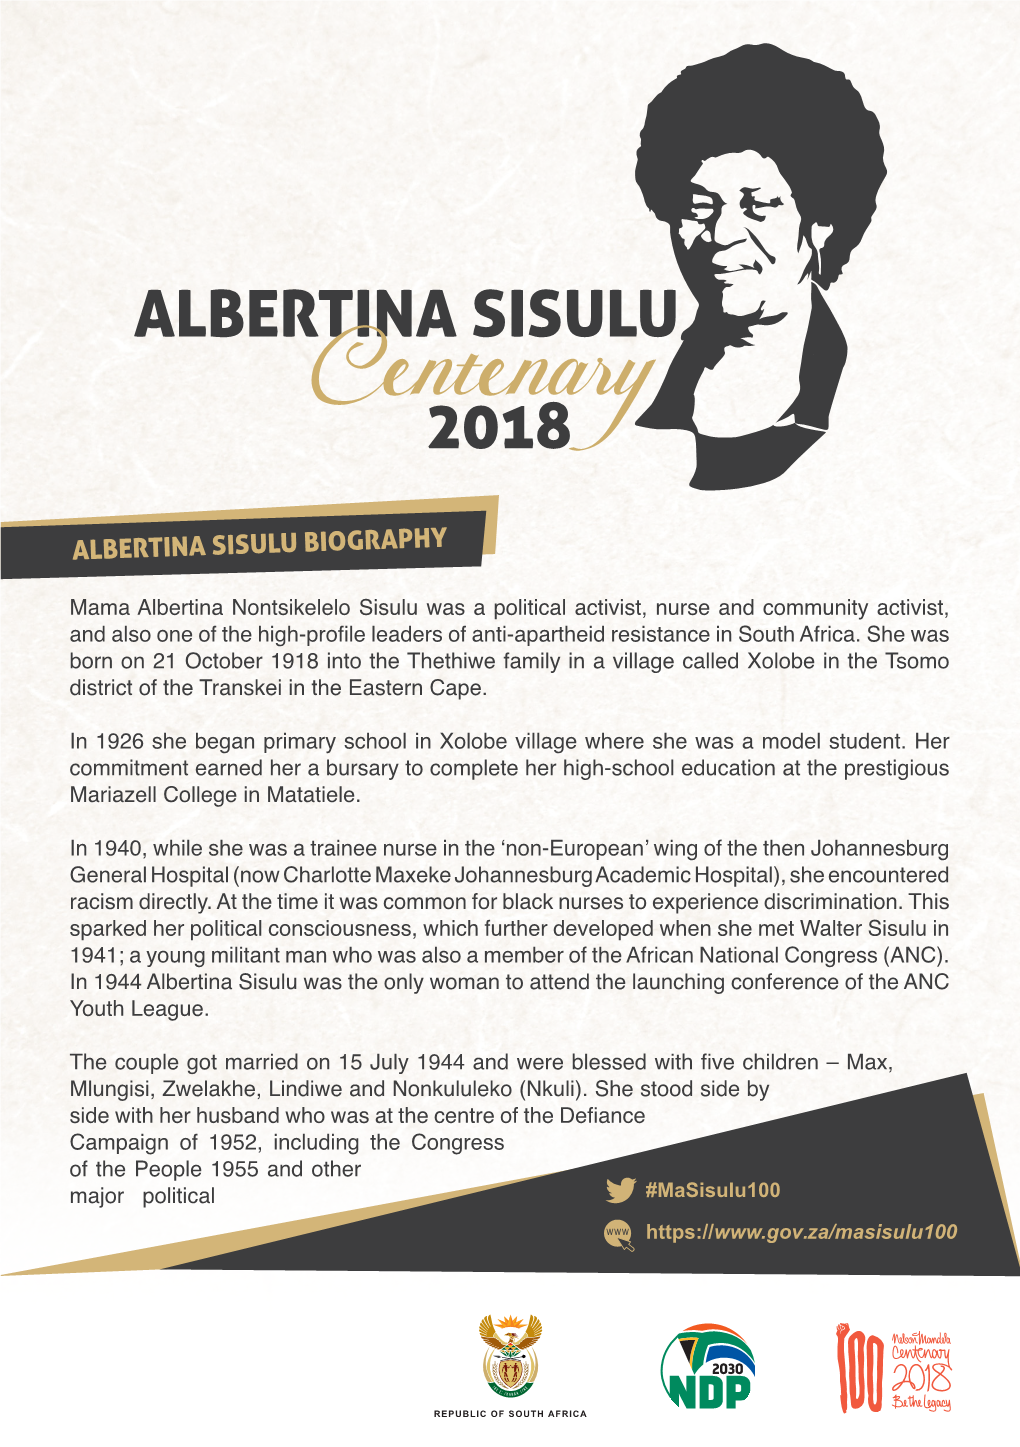 Albertina Sisulu Biography